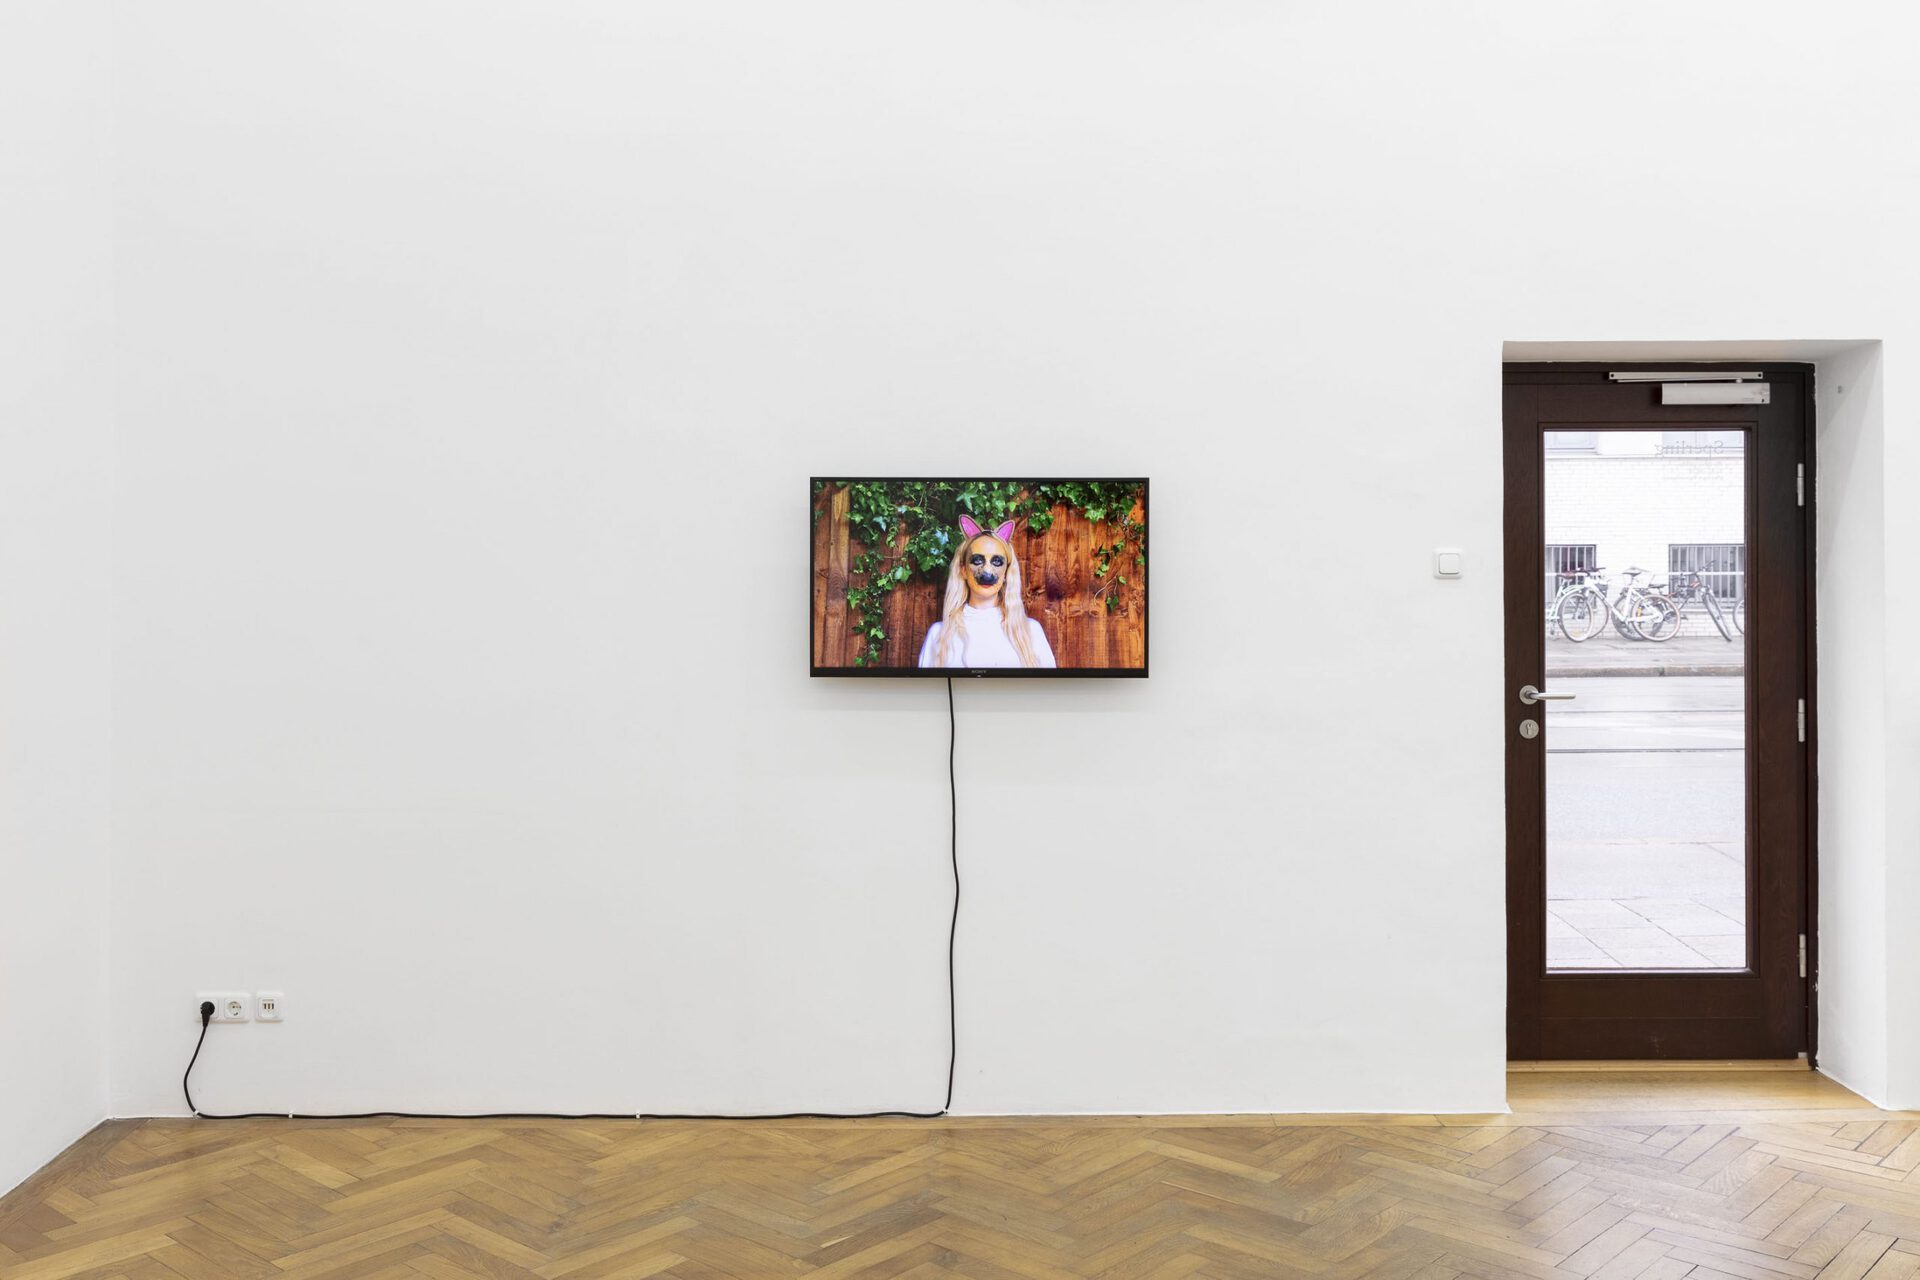 Marianna Simnett, Tito’s Dog, 2020, HD digital video, sound 6min, 56 sec, Courtesy the artist and Société, Berlin.